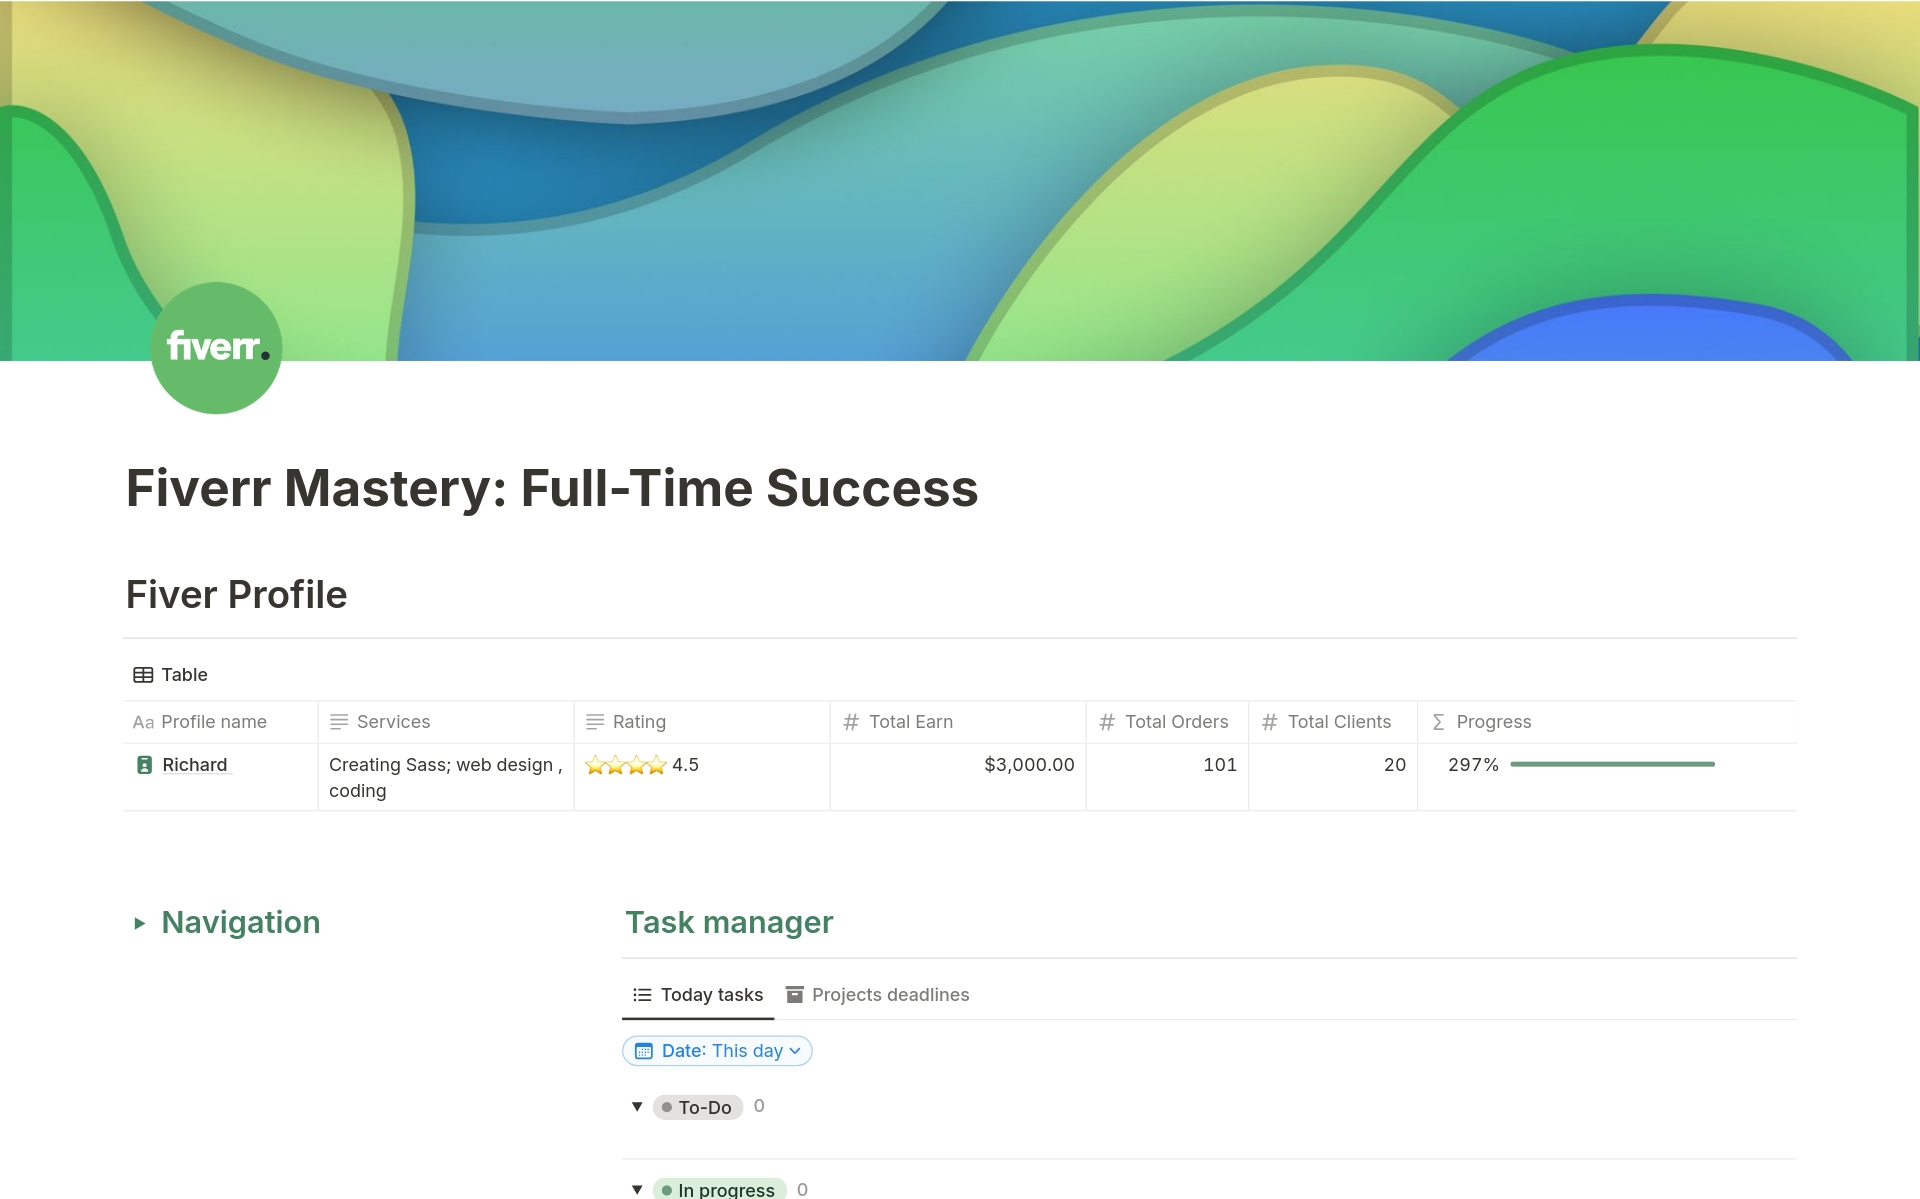 Vista previa de plantilla para Fiverr Mastery: Full-Time Success